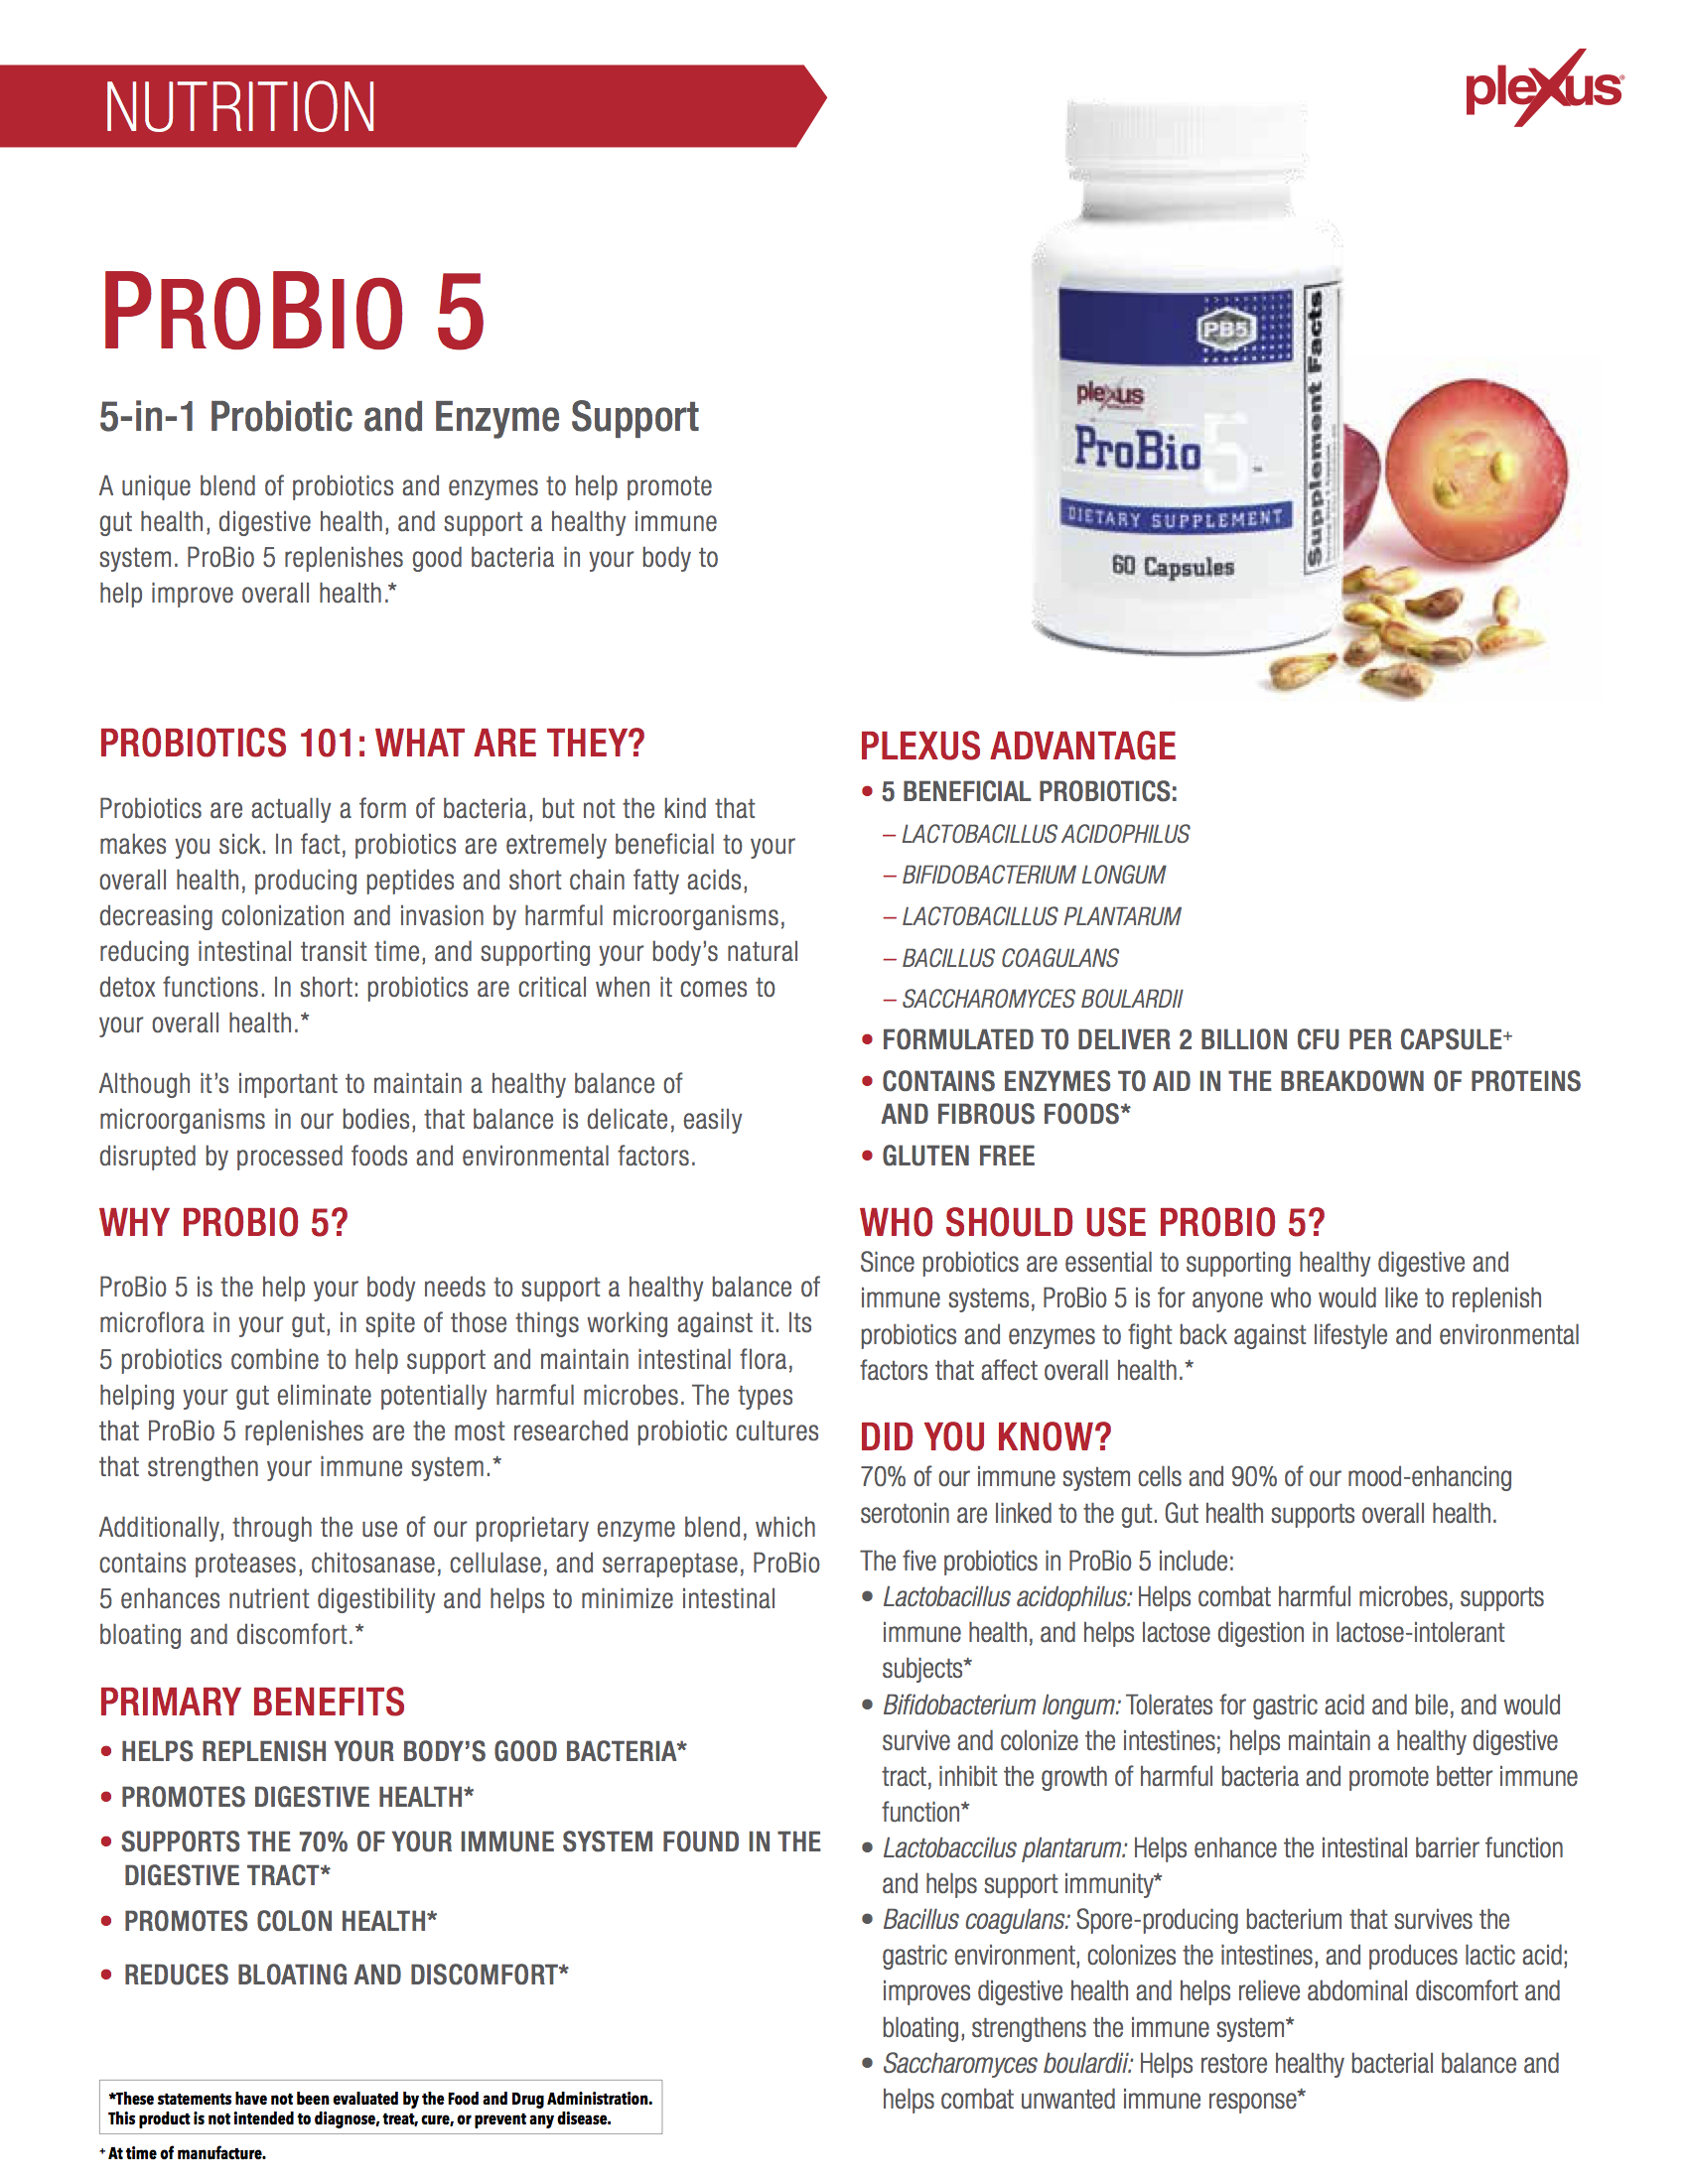 probio5-product-info-sheet.jpg